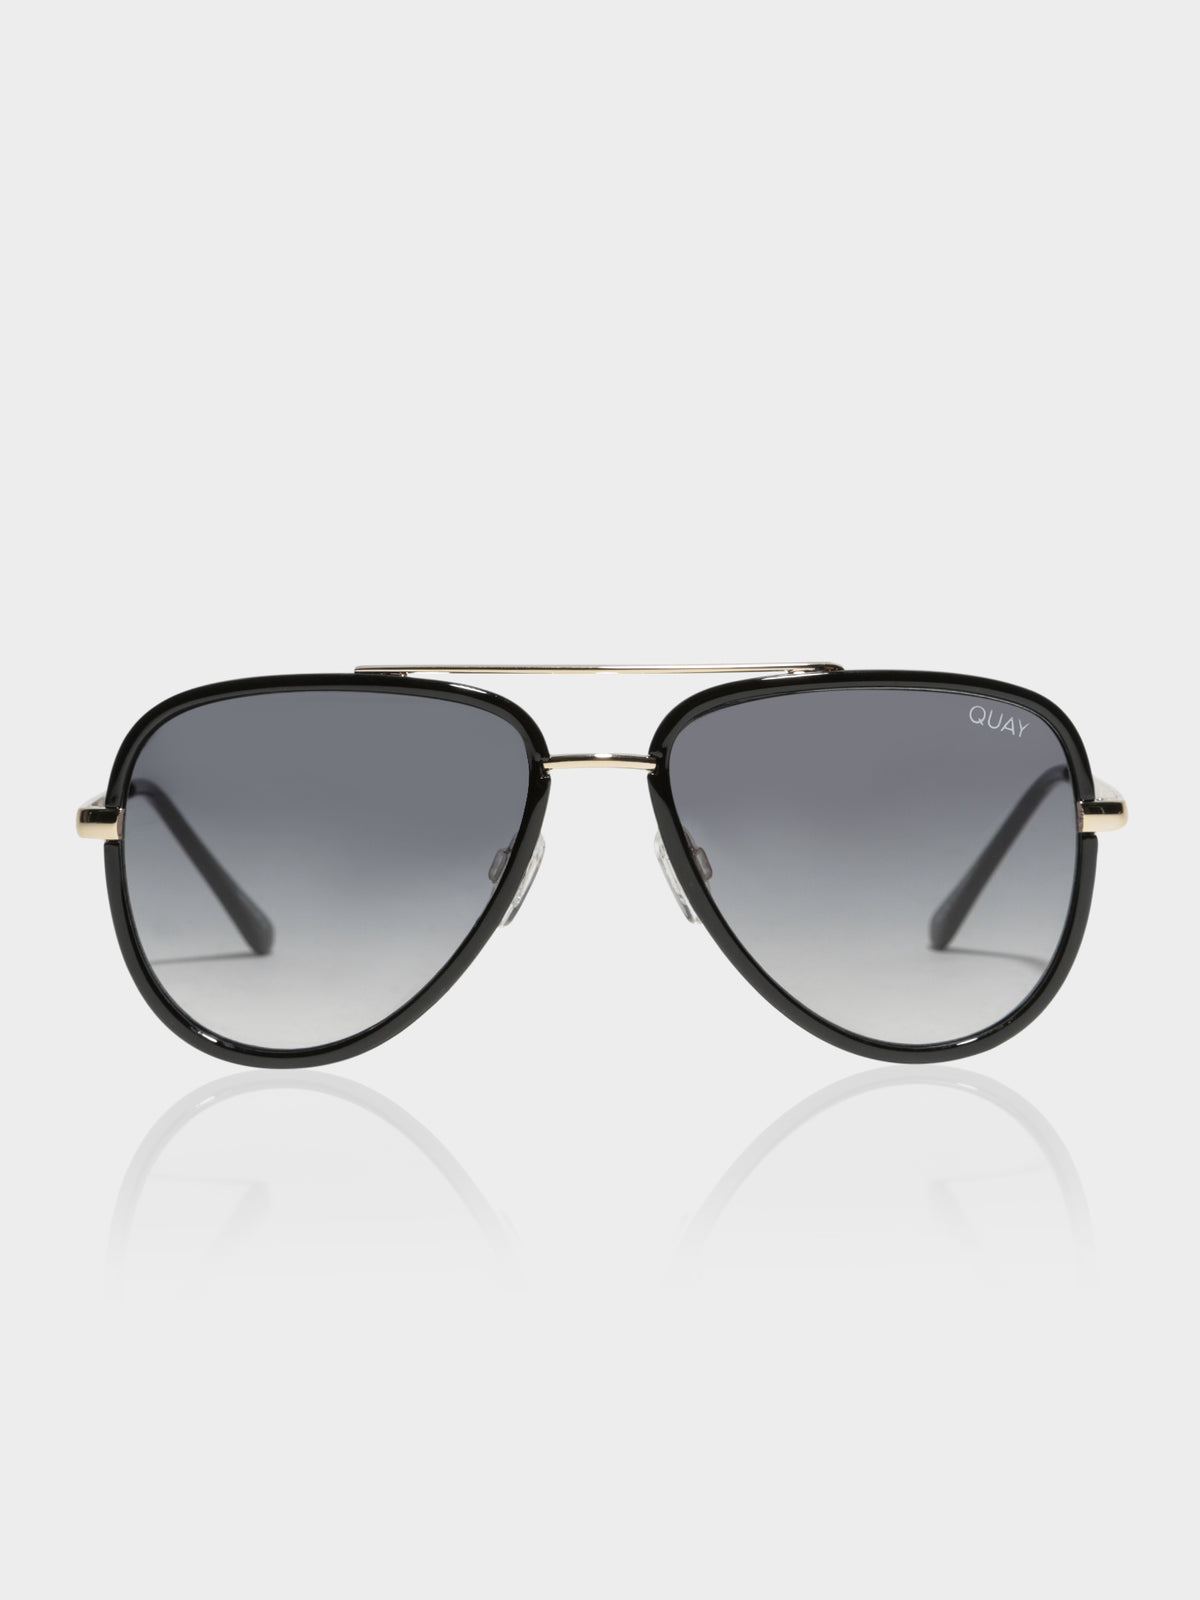 All In Mini Aviator Sunglasses in Black